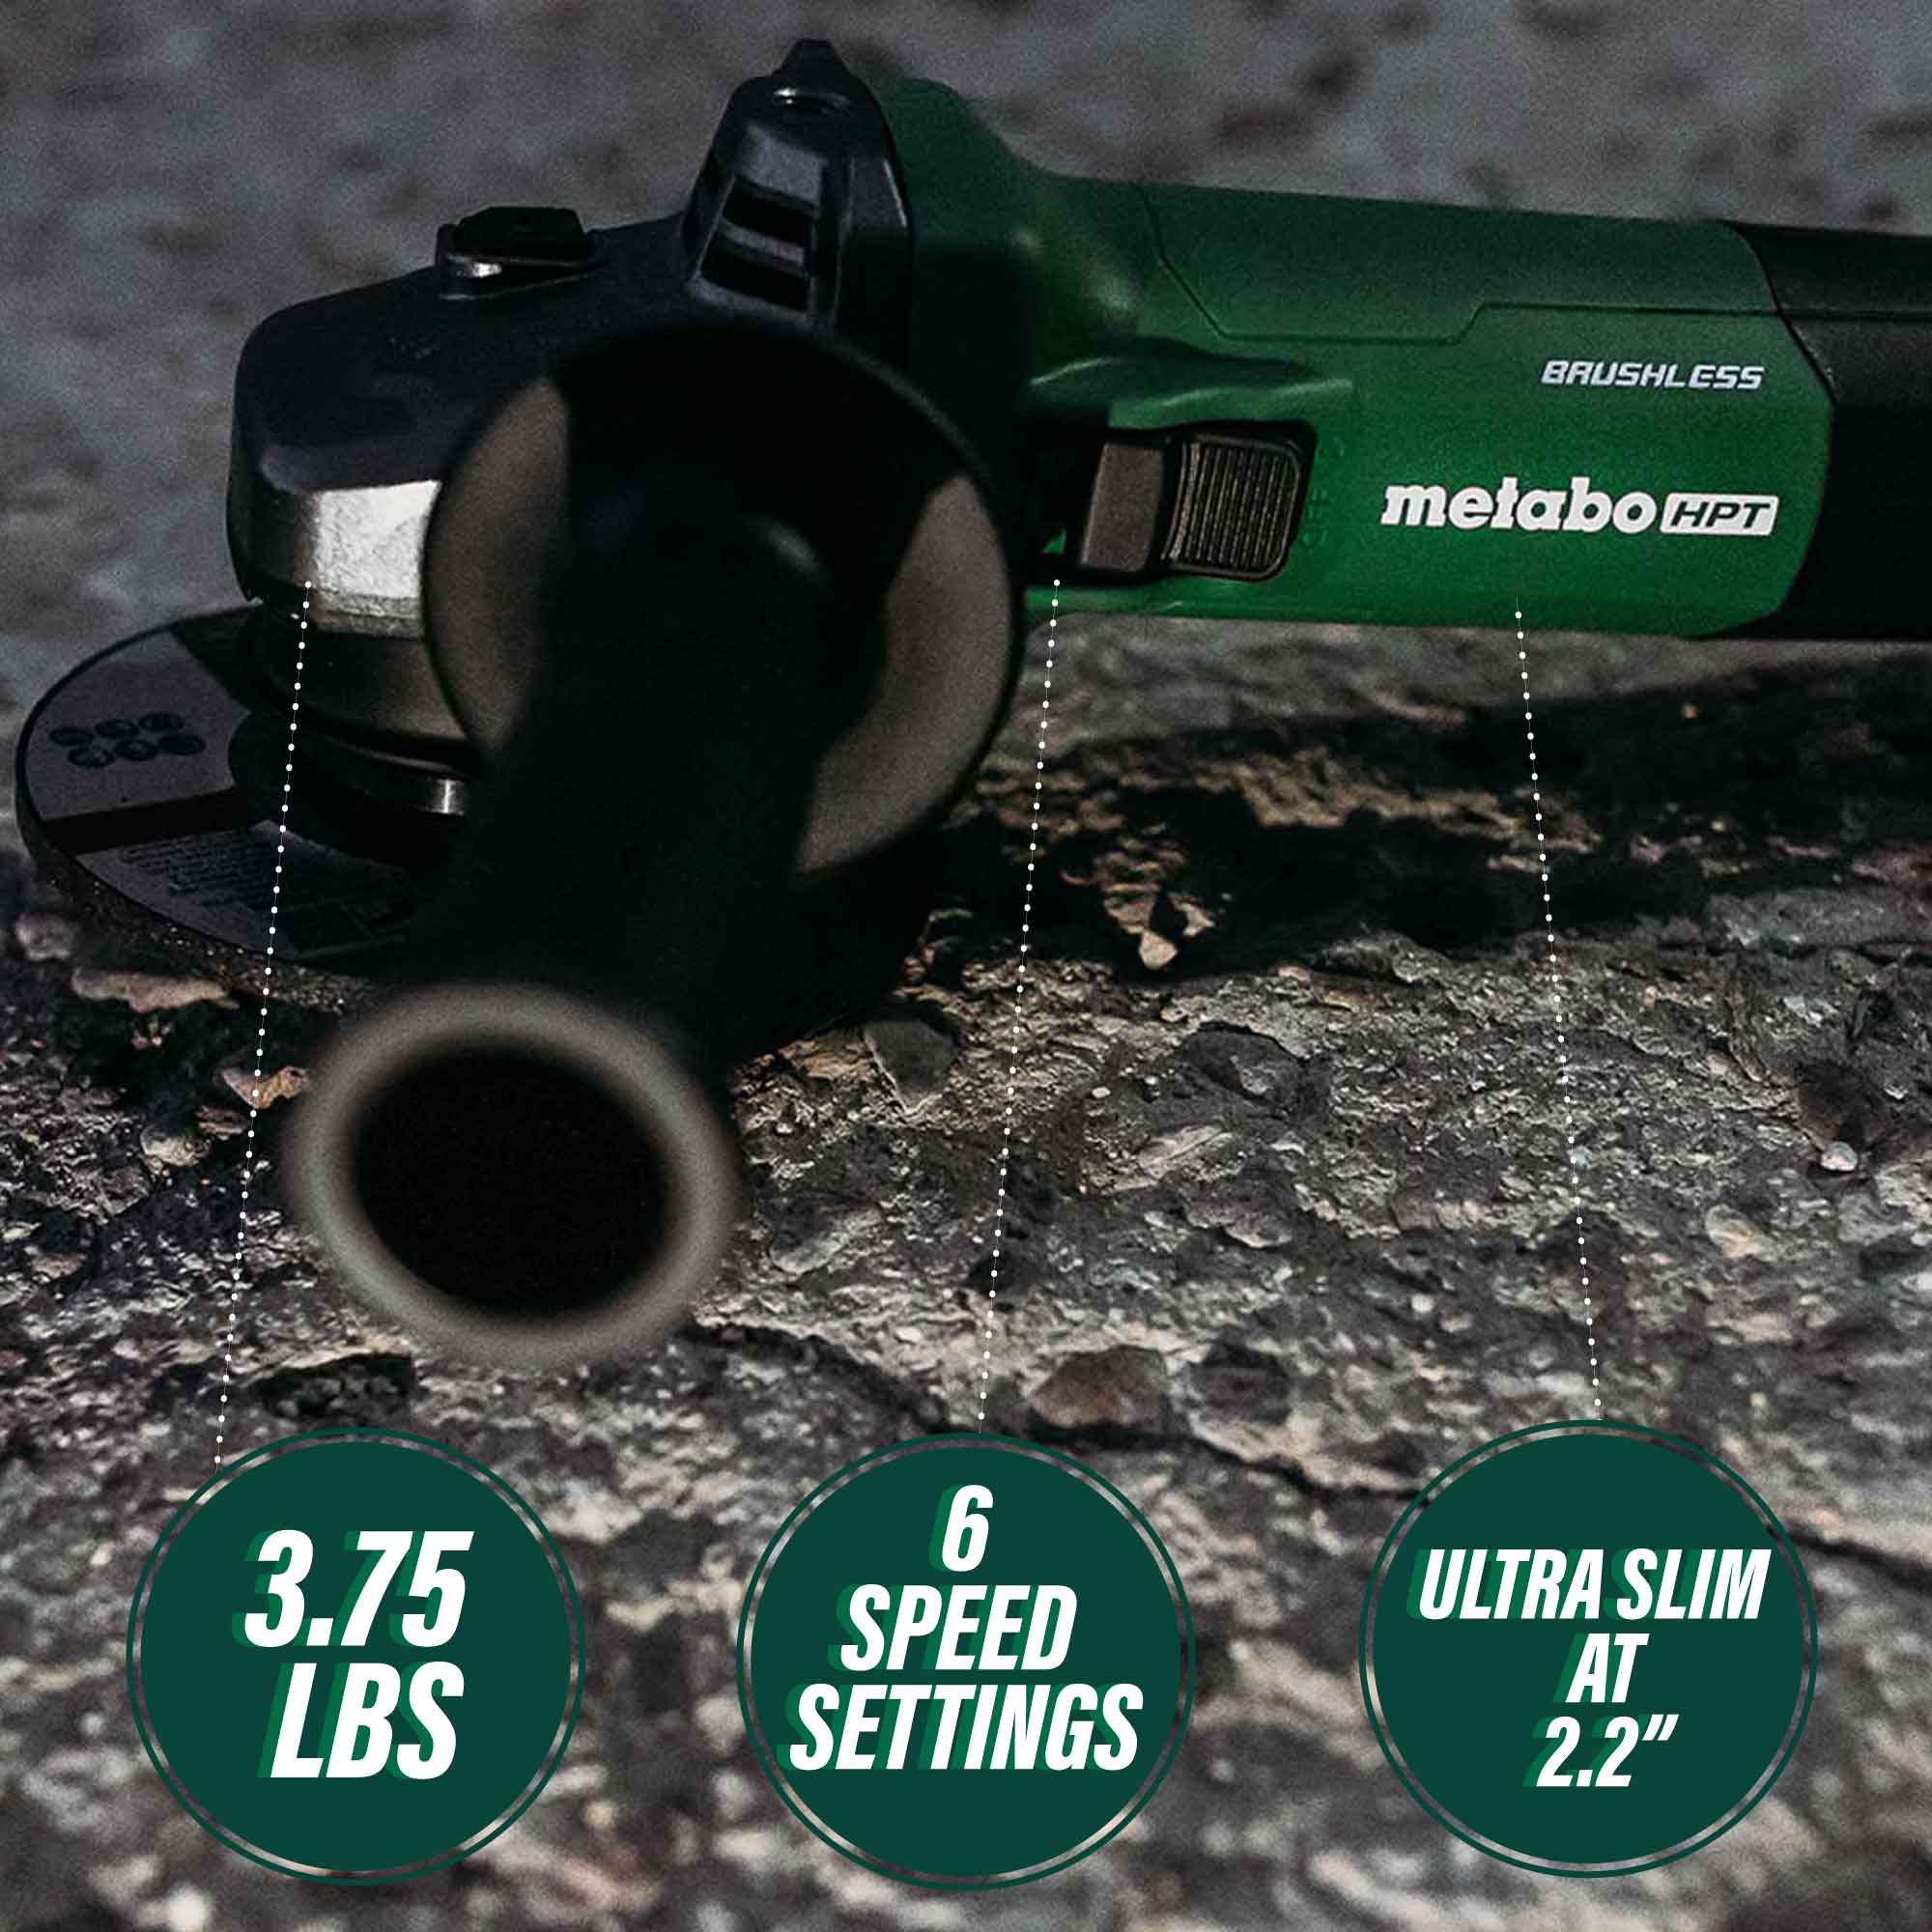 Hitachi / Metabo G13VE2M 12 Amp 5" Brushless Variable Speed Angle Grinder